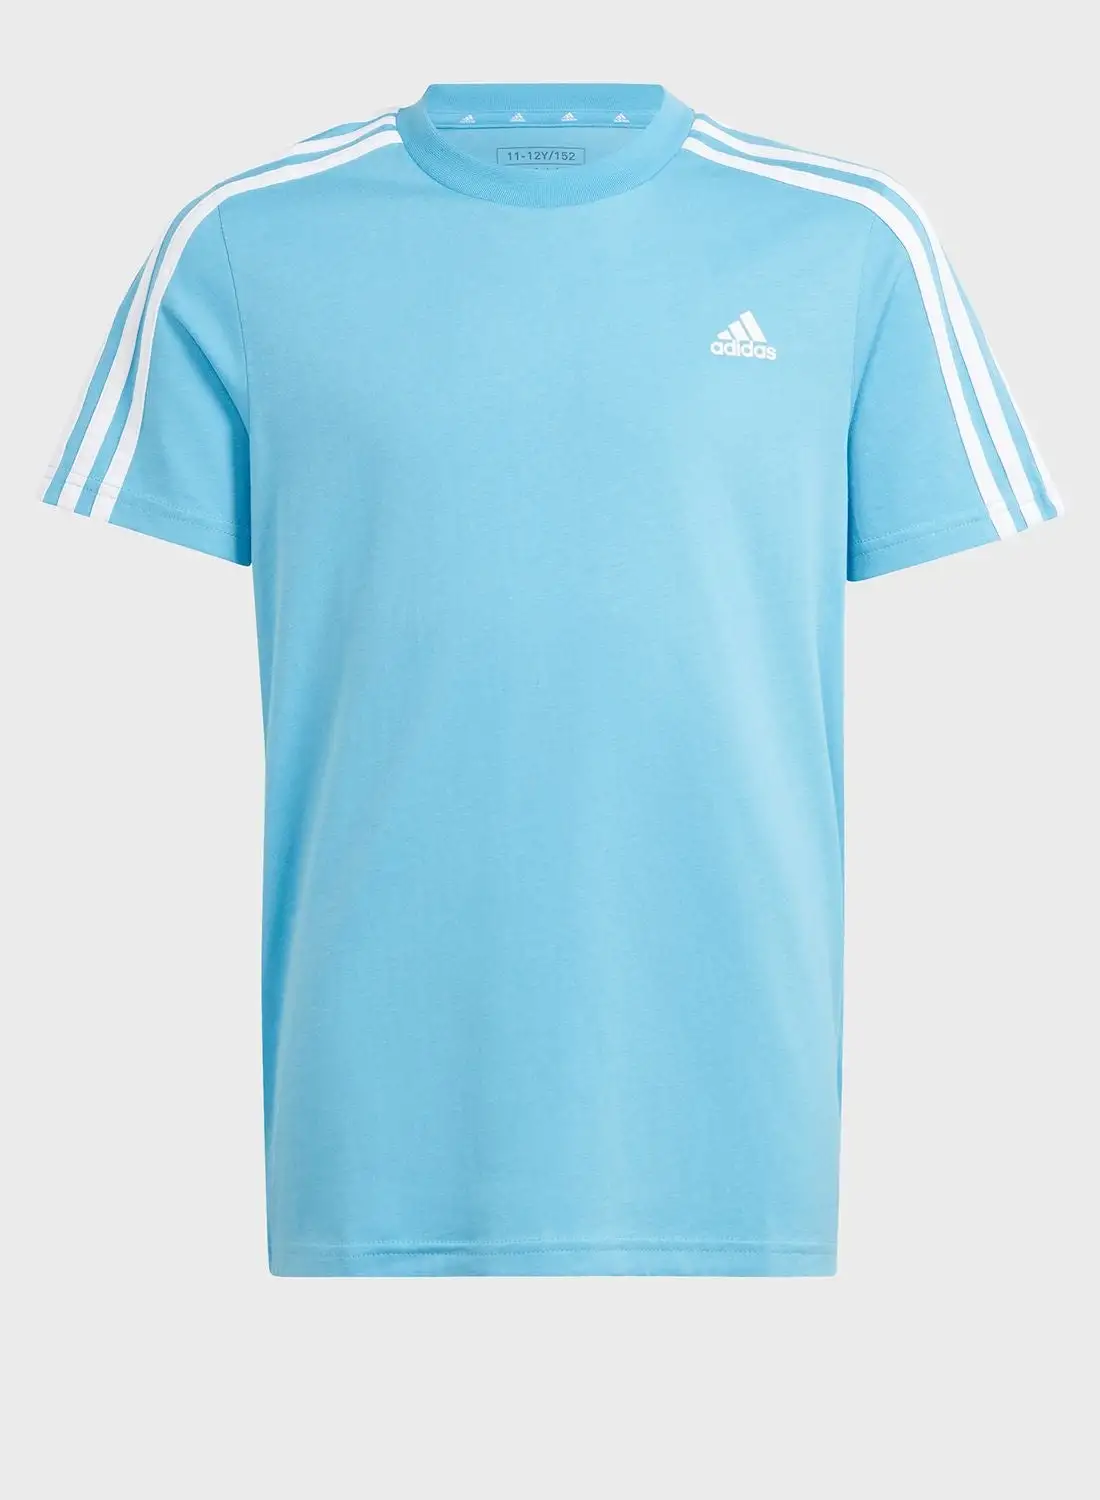 Adidas Unisex 3 Stripes T-Shirt